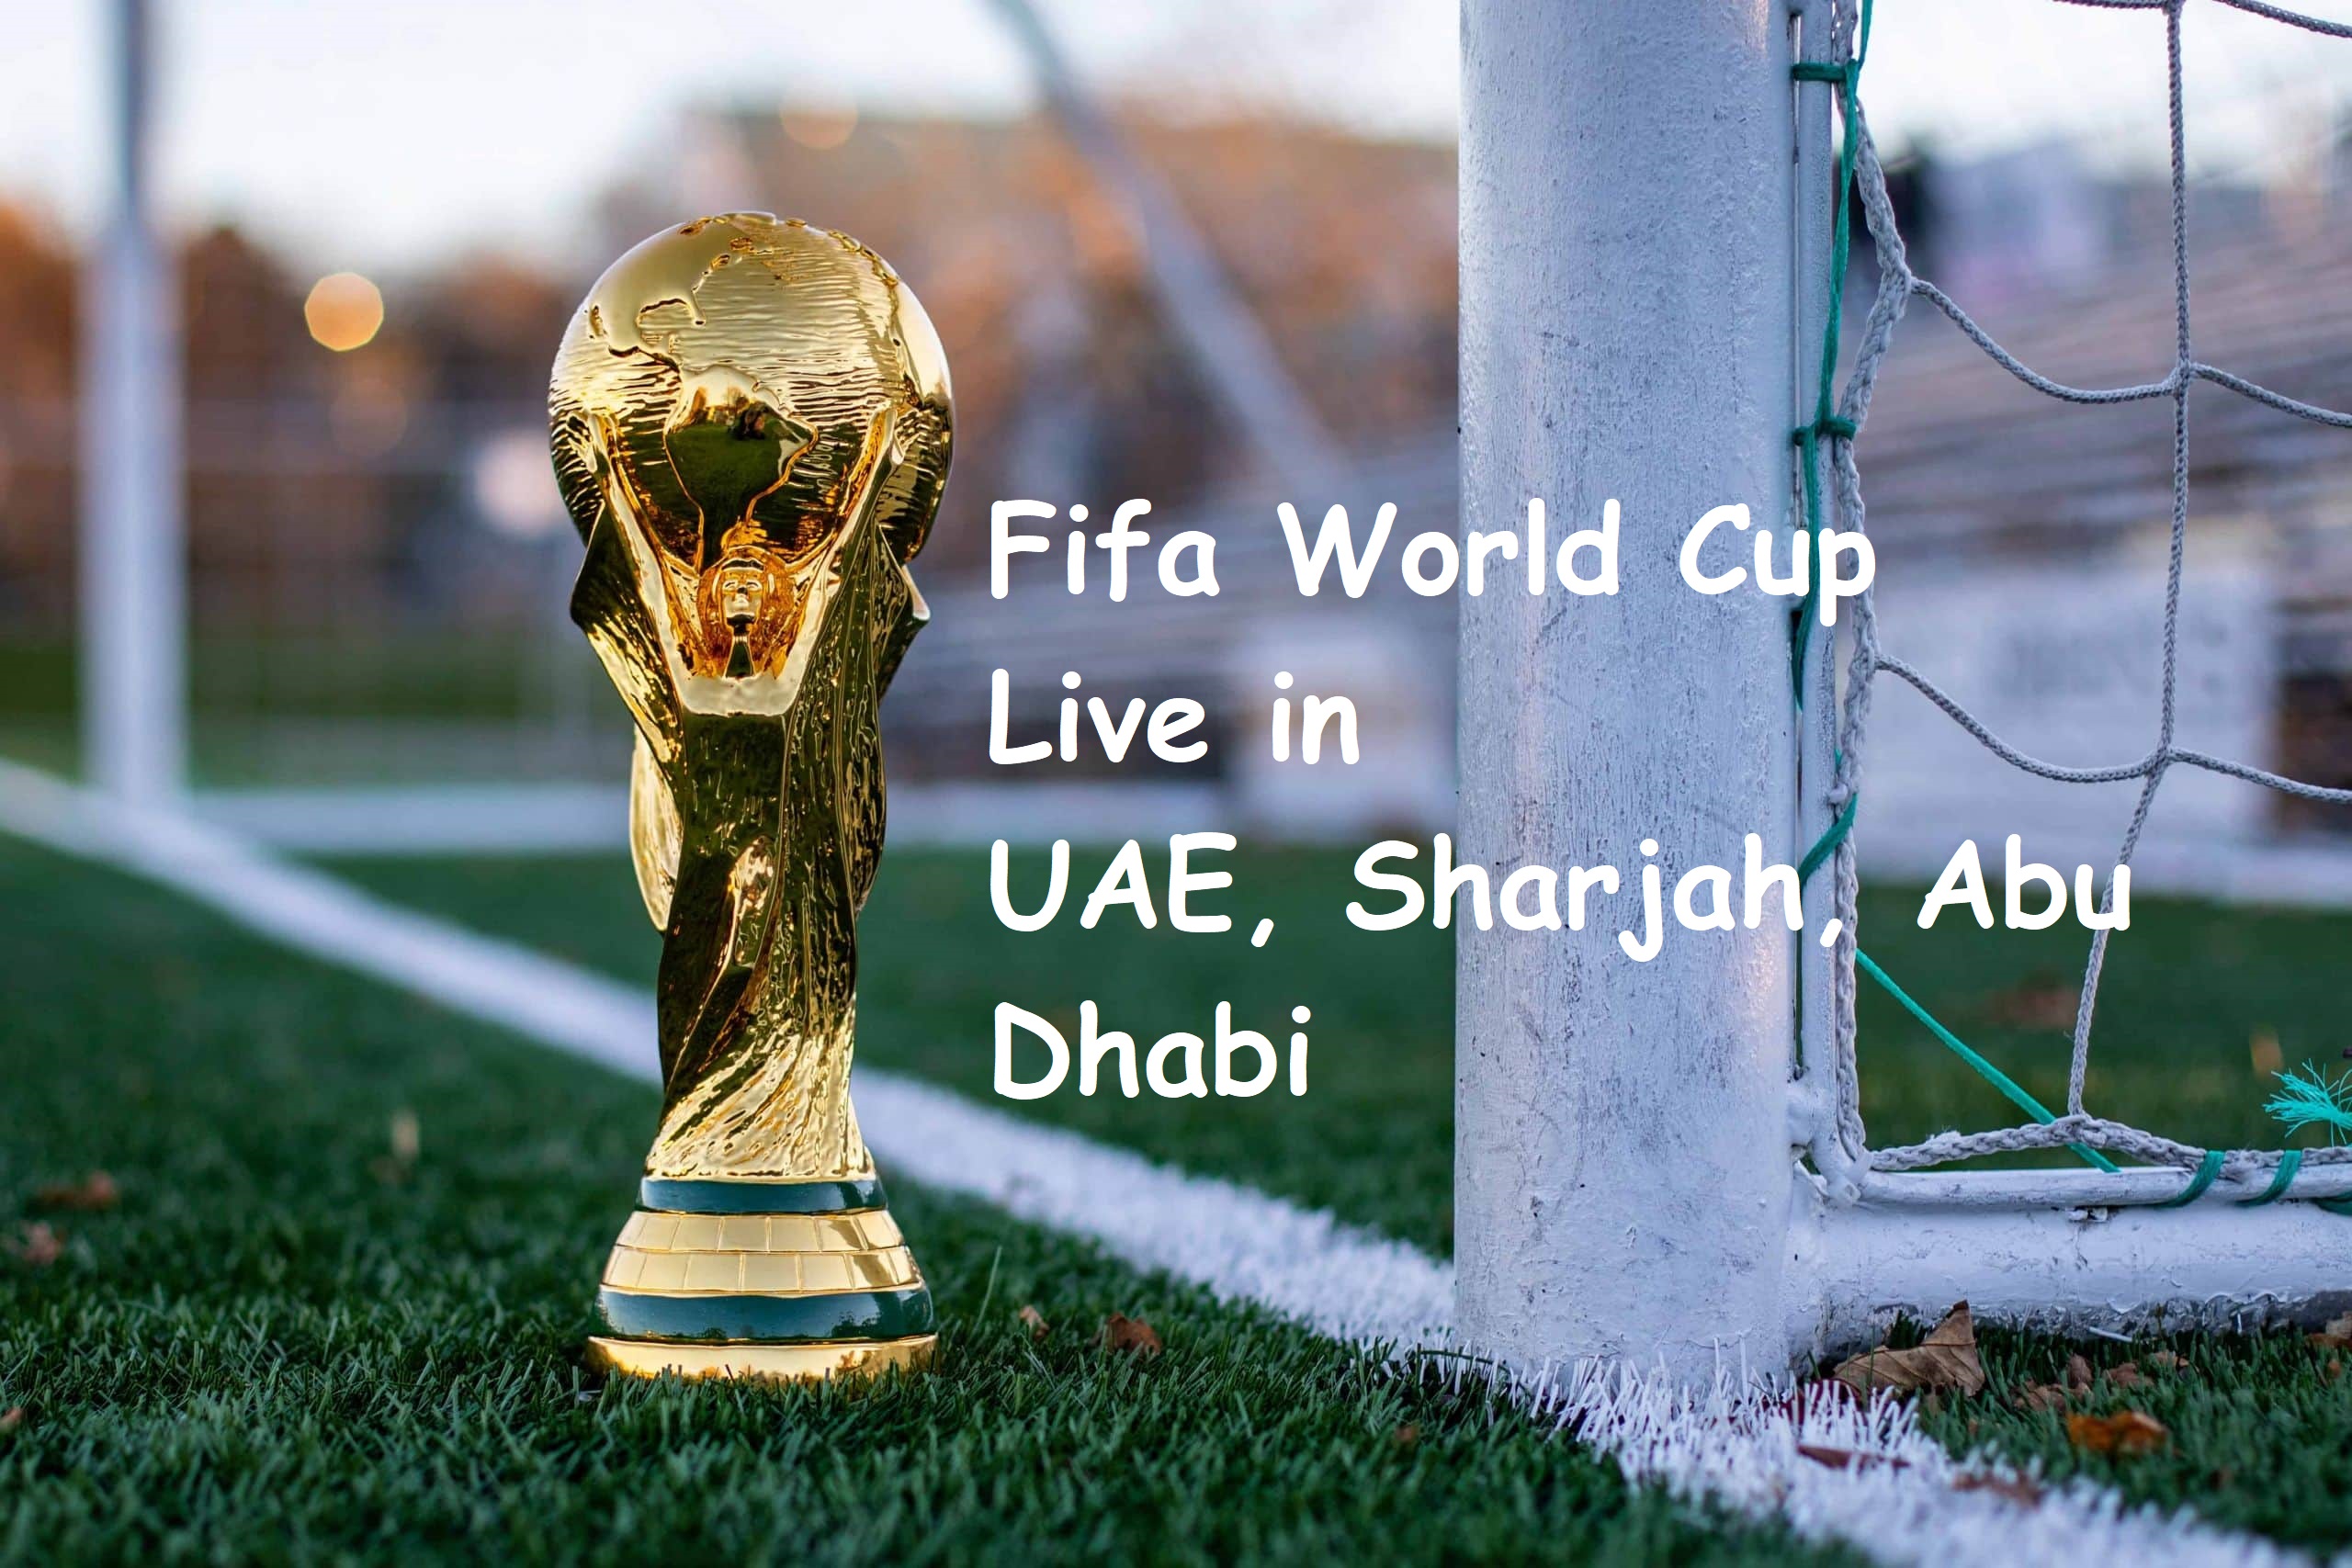 Fifa World cup live in uae dubai sharjah